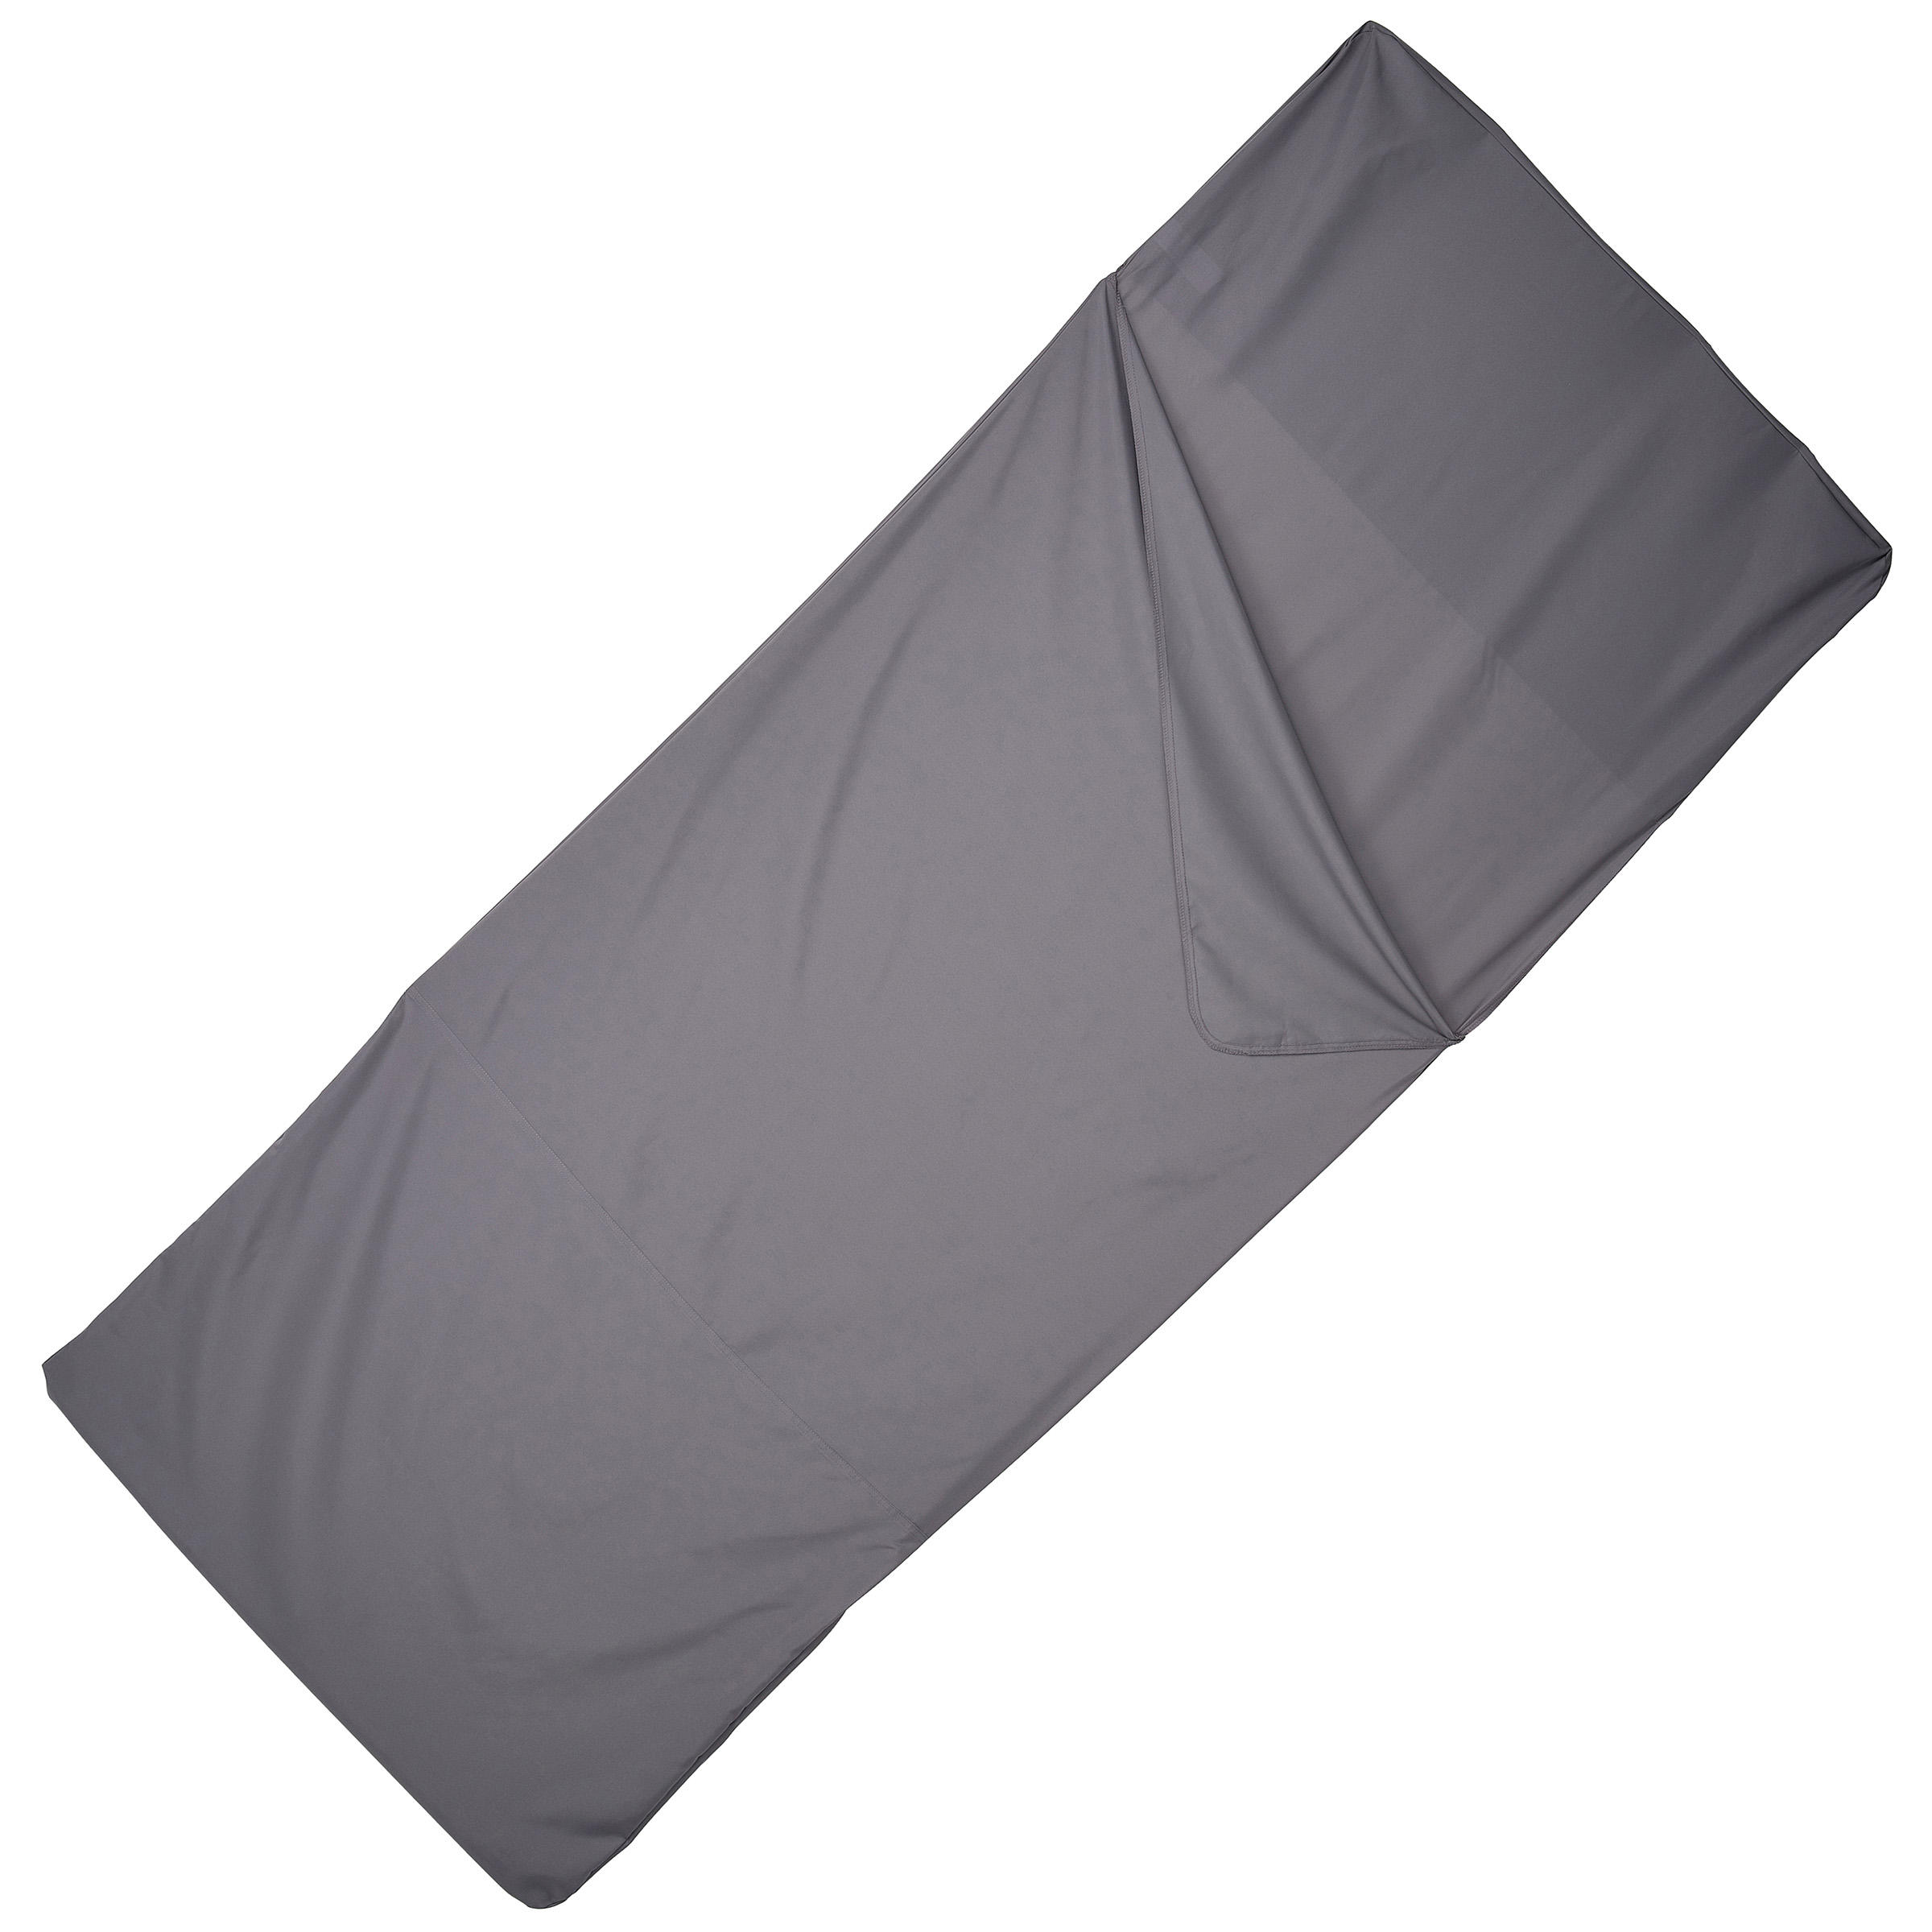 Sleeping Bags Sleeping bag liner Bed Sheets Travel Travel tent gunny  Sack sleep png  PNGWing